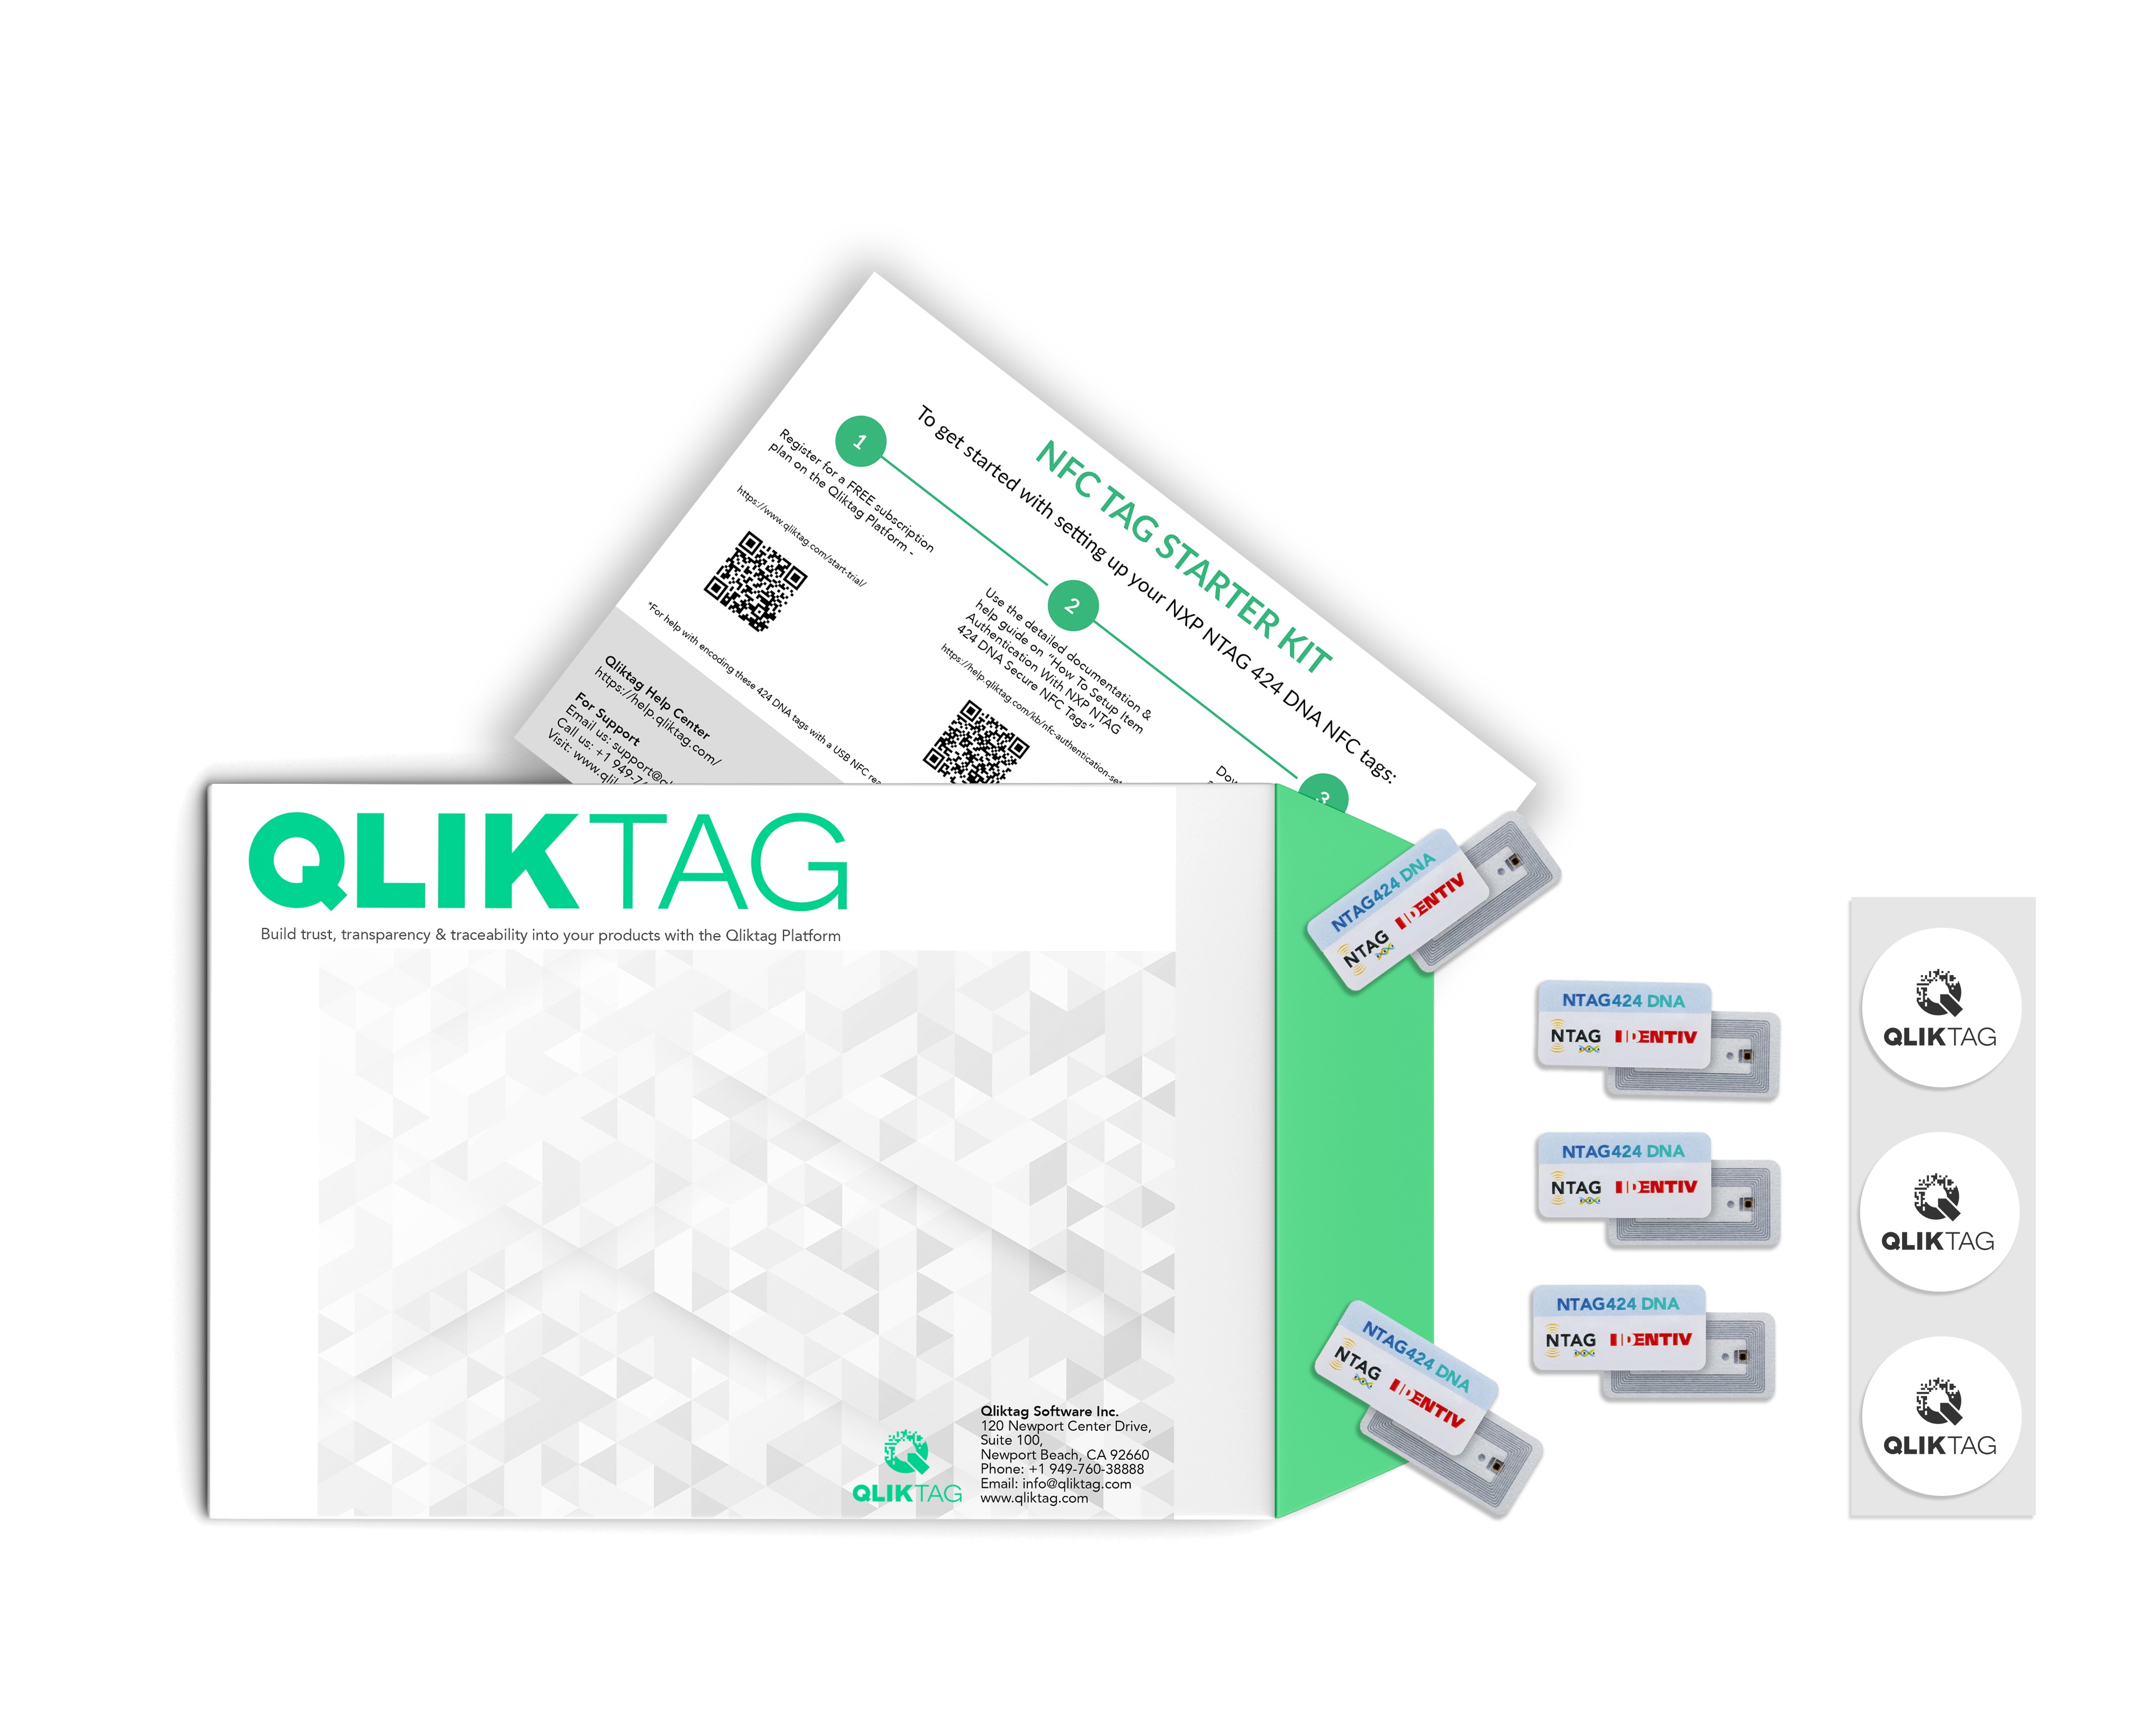 Qliktag NFC Starter Kit NXP NTAG 424 DNA NFC Tags for Anti Counterfeiting NFC Tag - NXP NTAG 424 DNA NFC Tags